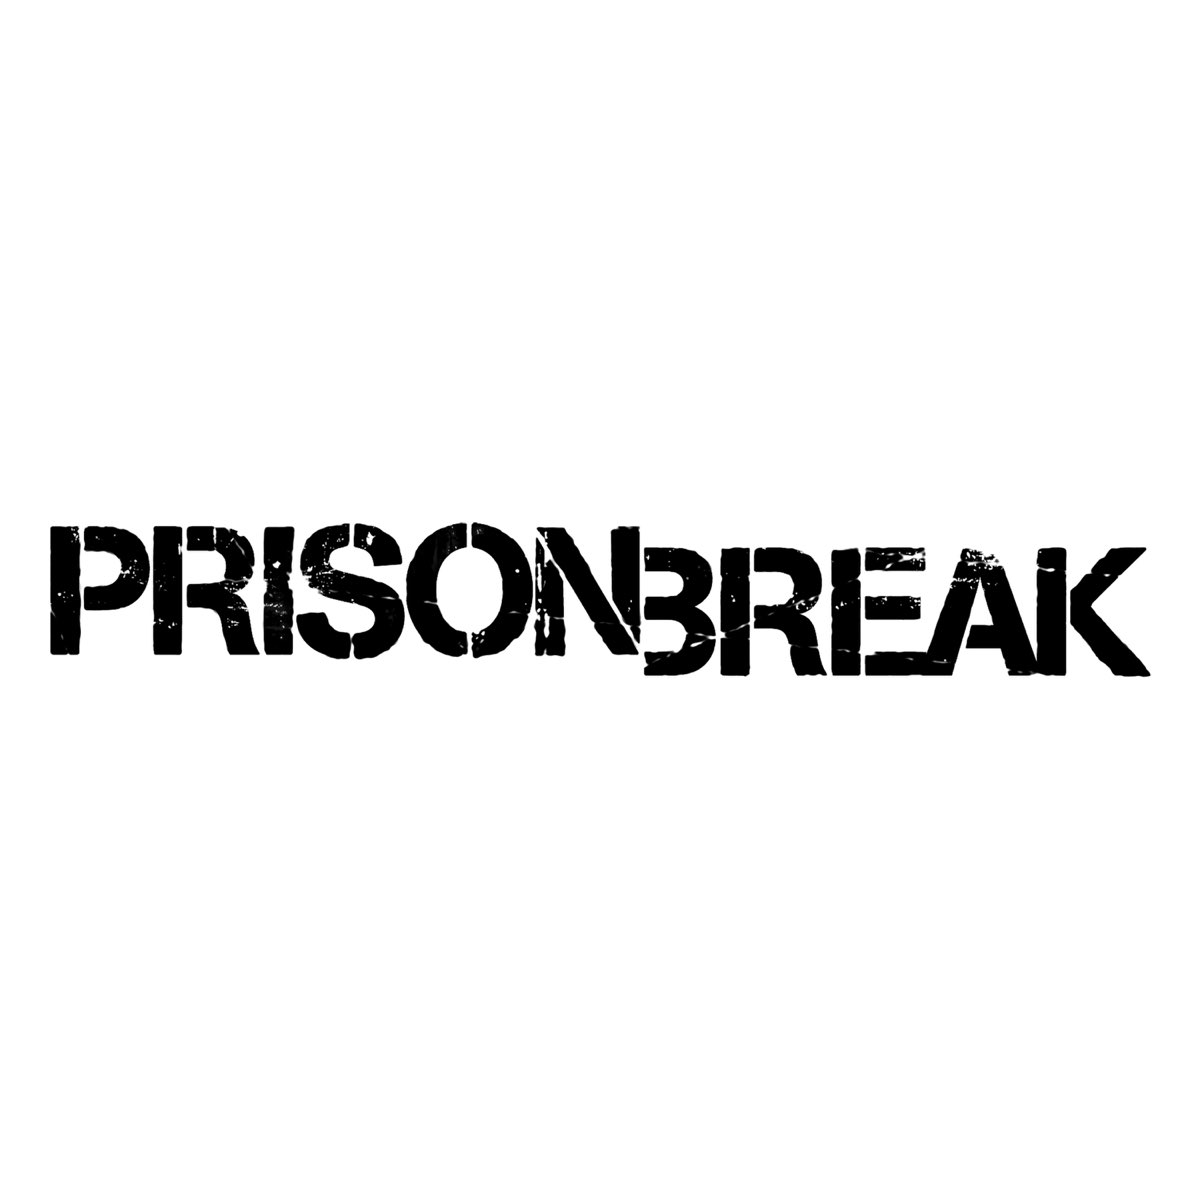 Prison Break Theme (From "Prison Break") [Ferry Corsten Breakout Mix] -  Single - Album by Ramin Djawadi - Apple Music